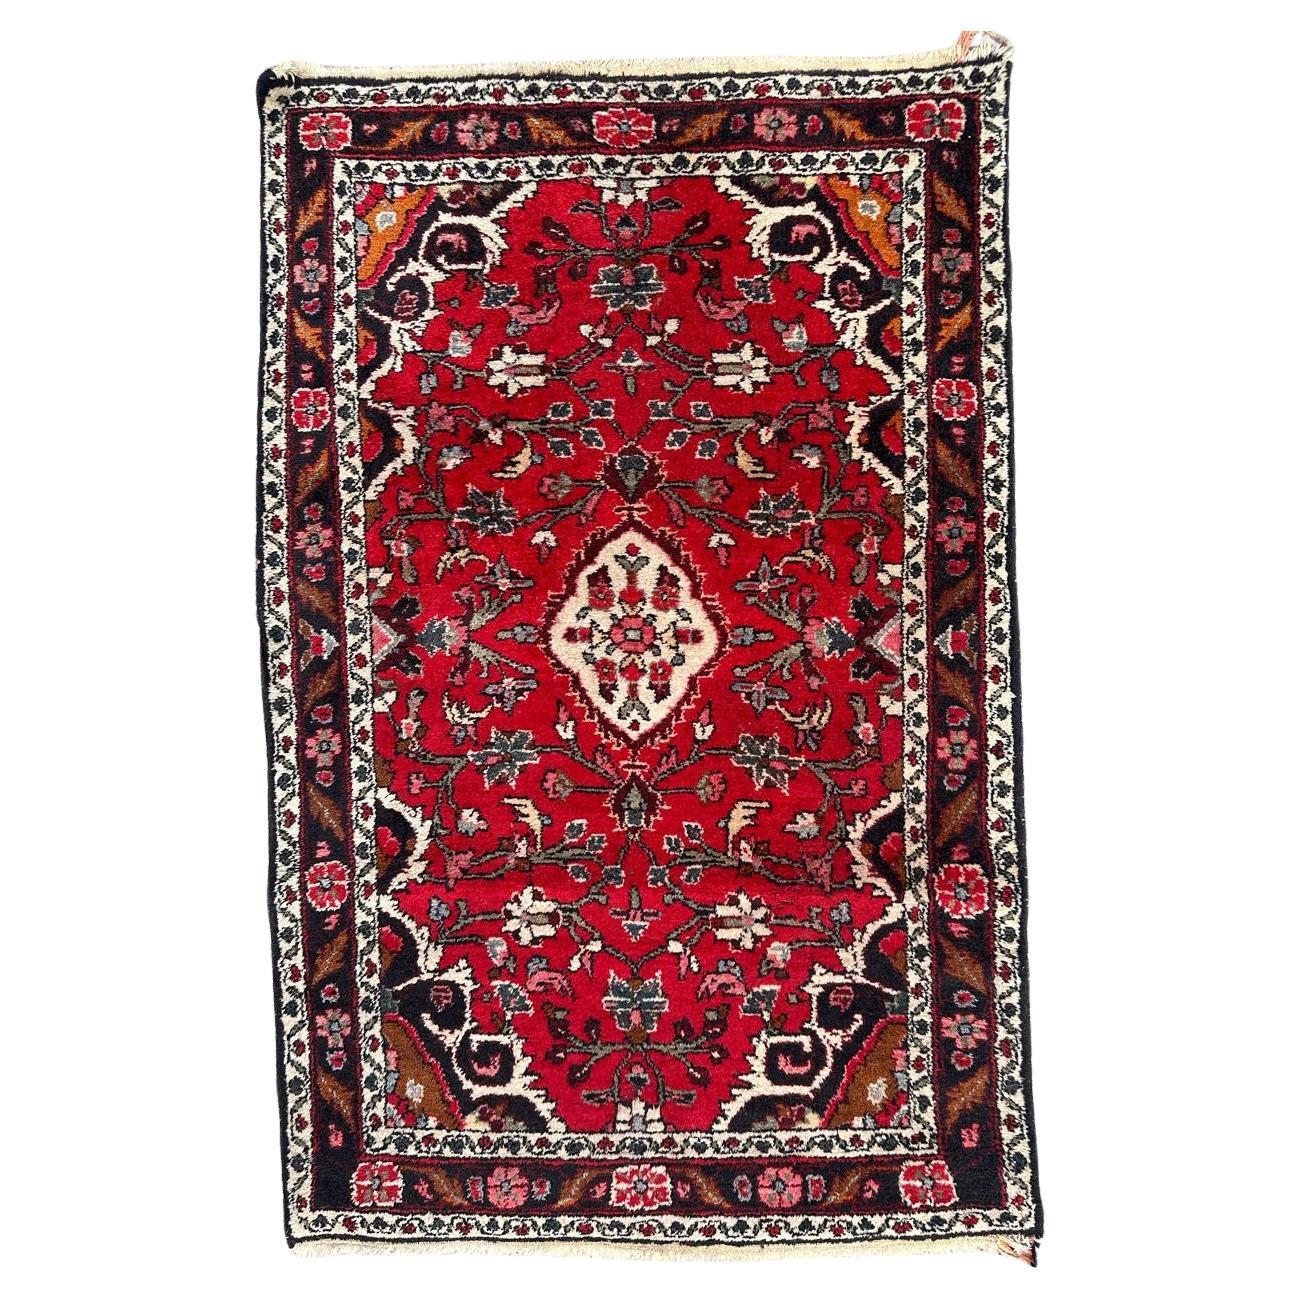 Bobyrug’s pretty vintage moussel rug 